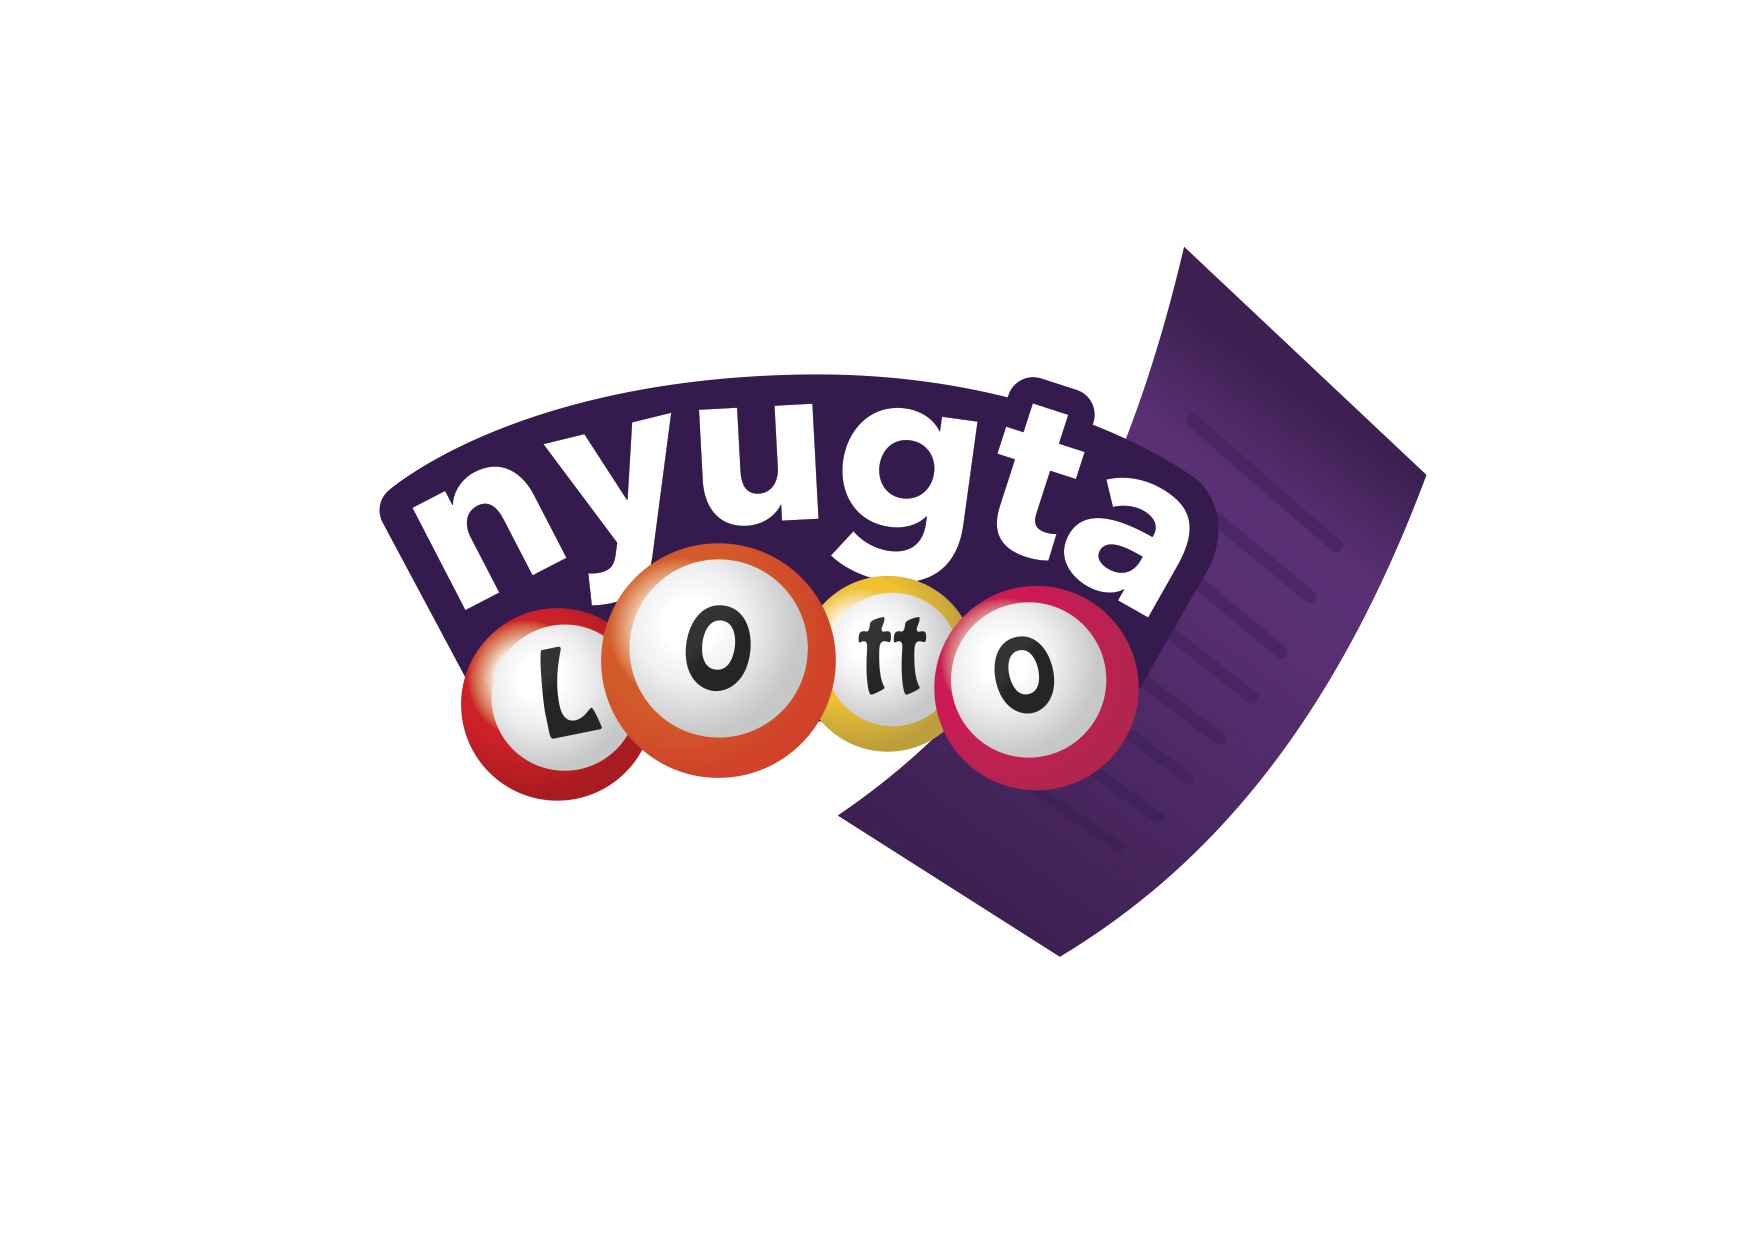 nyugtalotto_logo.jpg